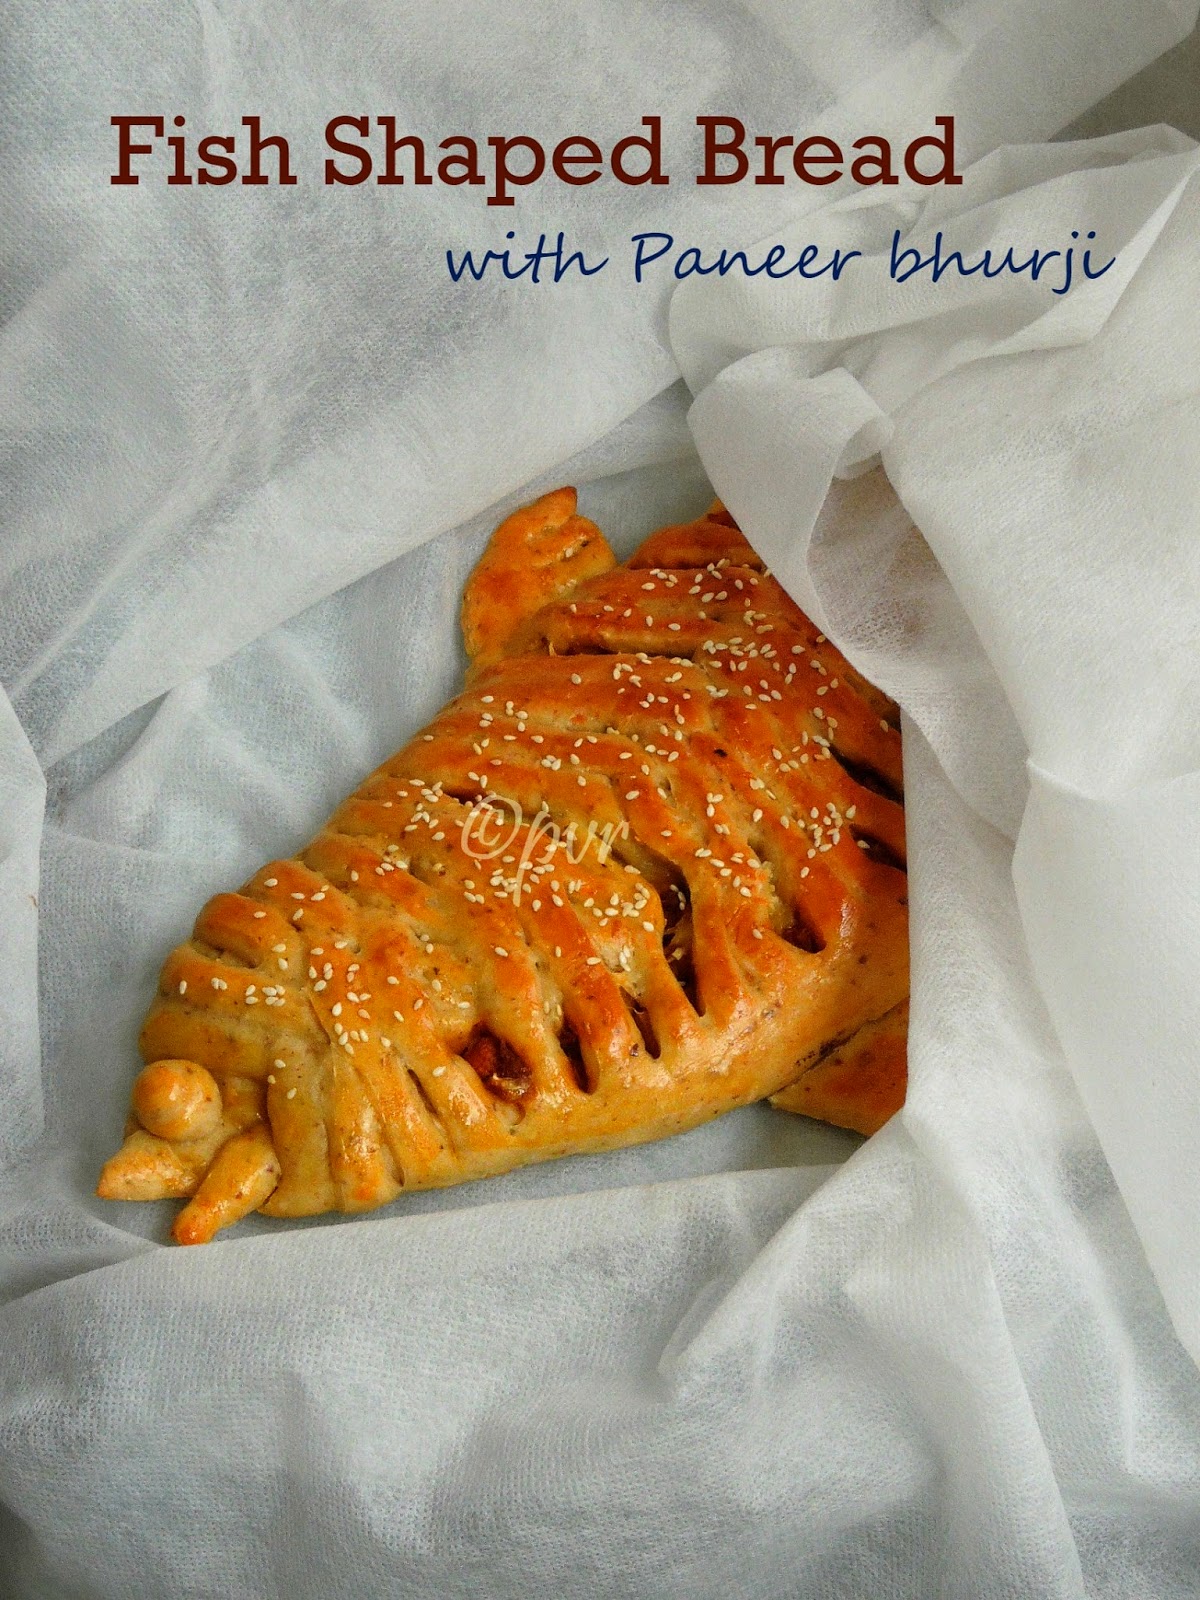 Paneer bhurji stuffed Fish shaped bread 